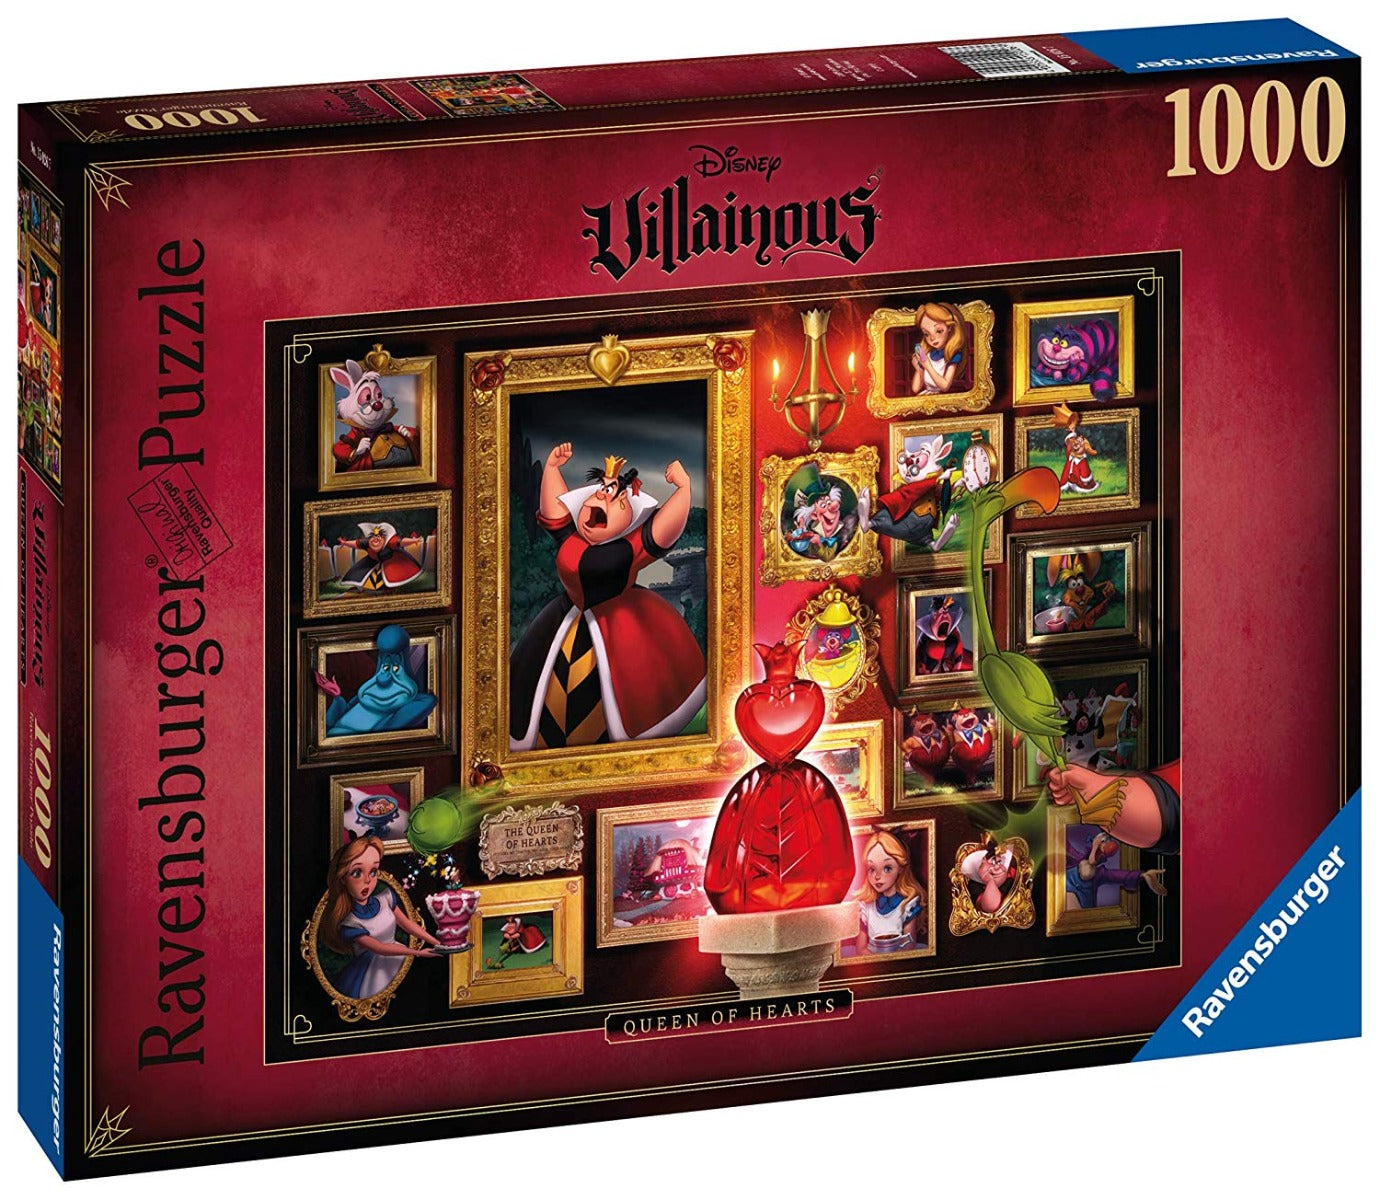 Ravensburger 15026 Disney Villainous Queen Of Hearts 1000 piece Jigsaw Puzzle